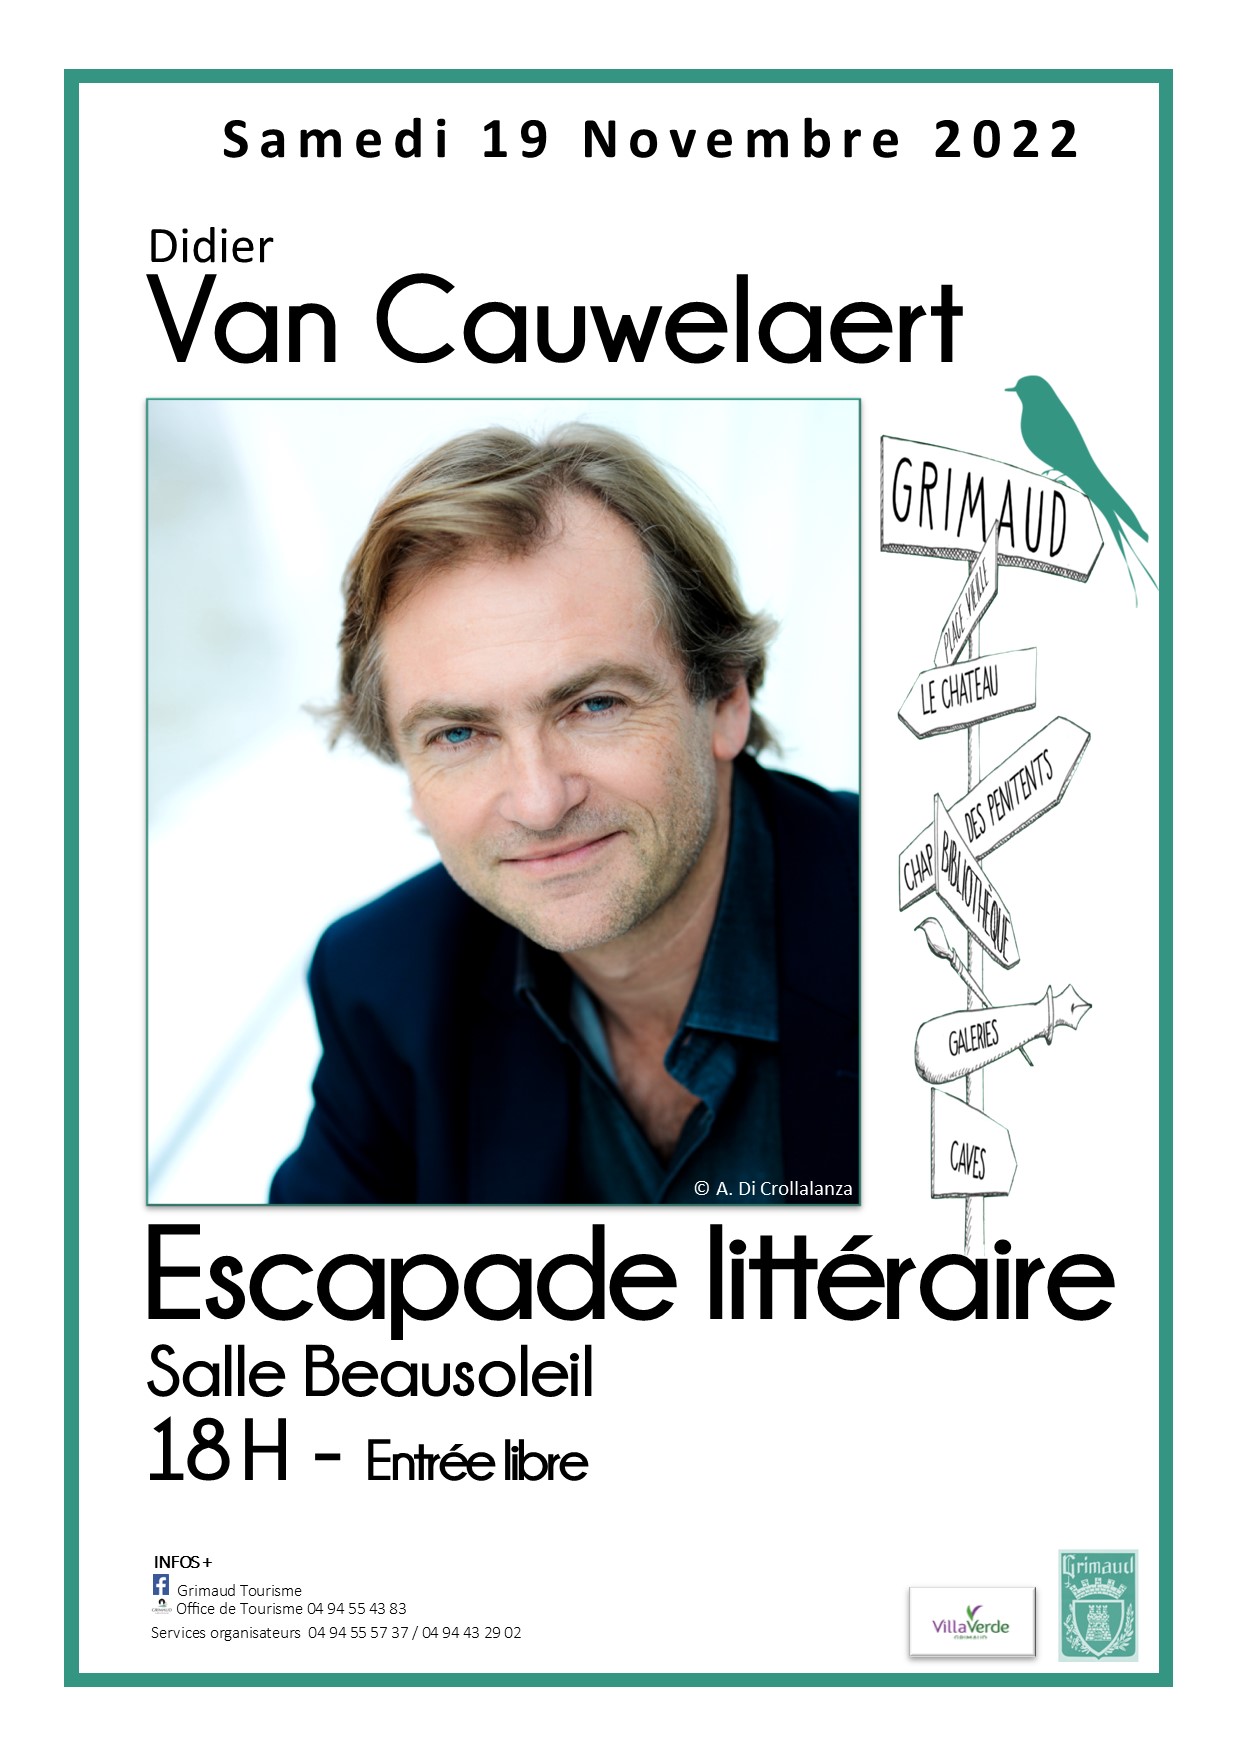 Samedi 19 novembre 2022 : Escapade littéraire avec Didier Van CAUWELAERT